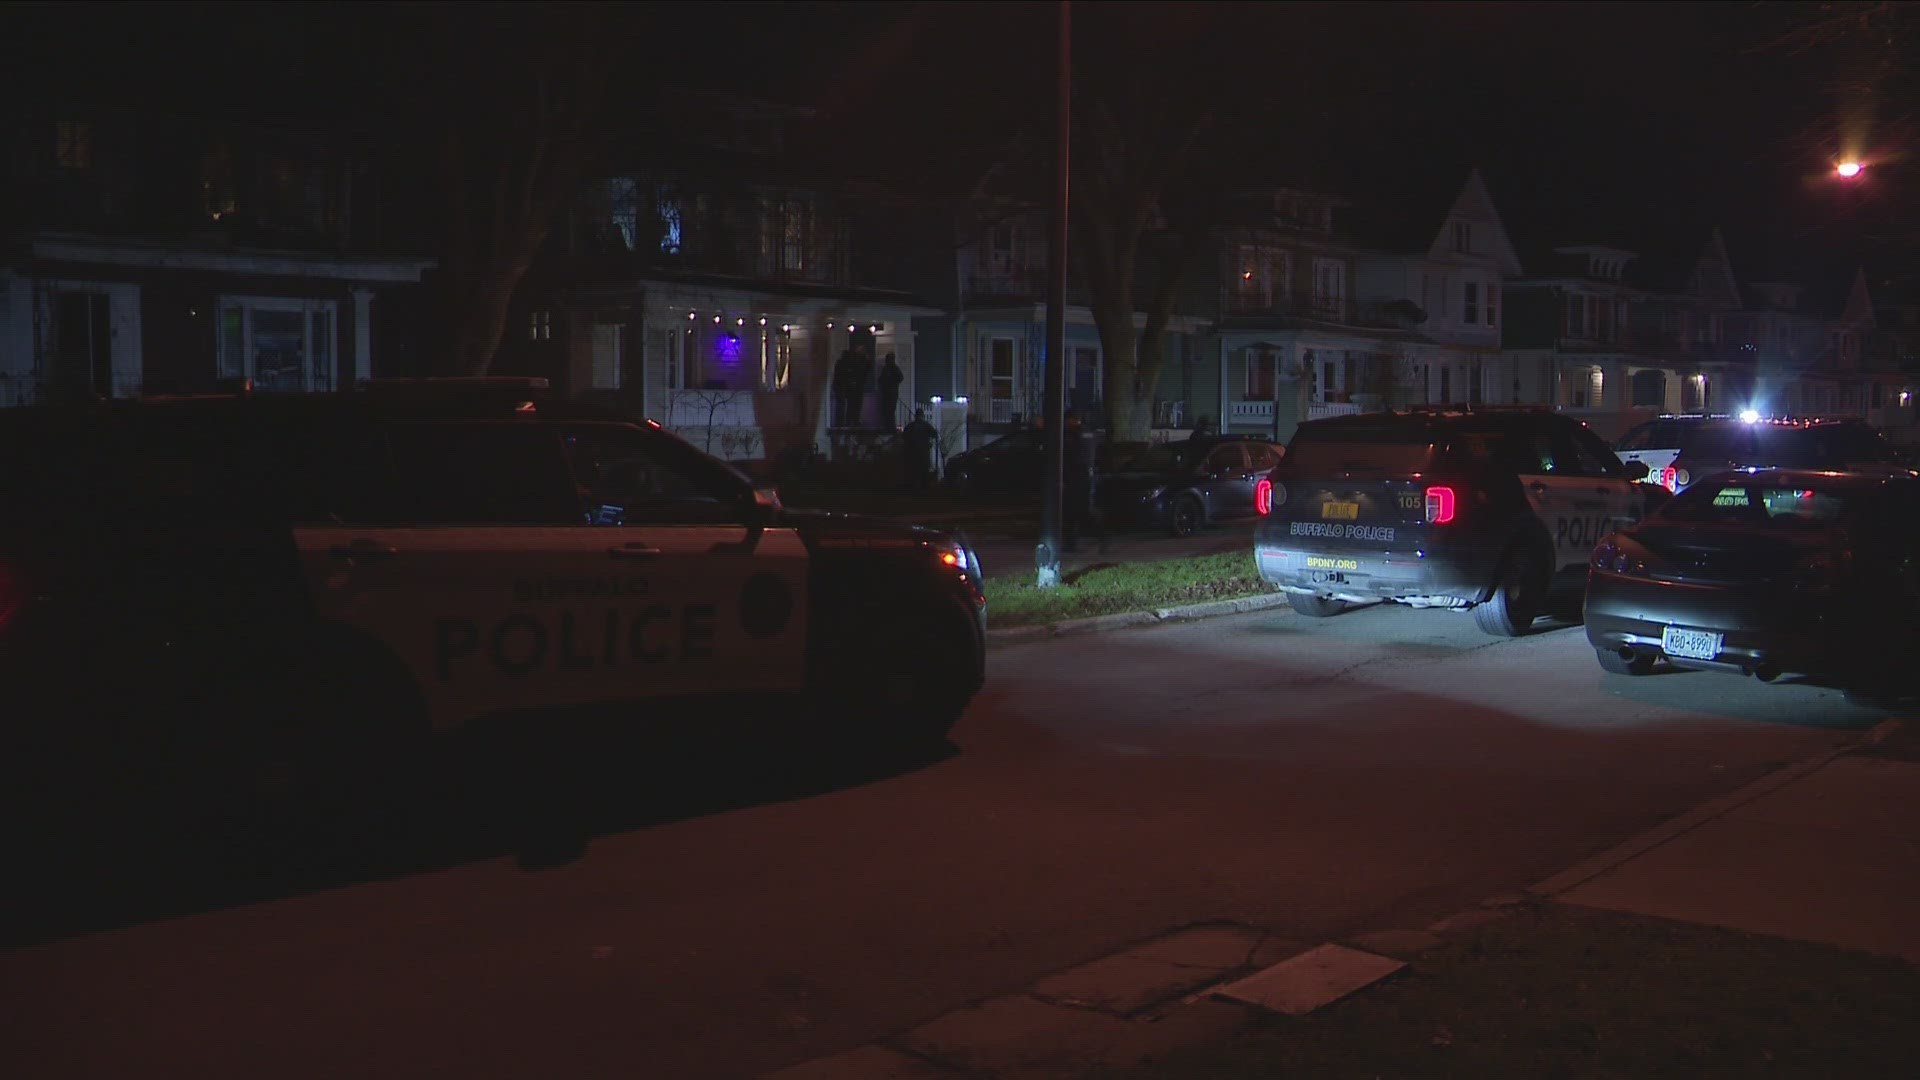 BPD said two people were shot overnight in Buffalo.